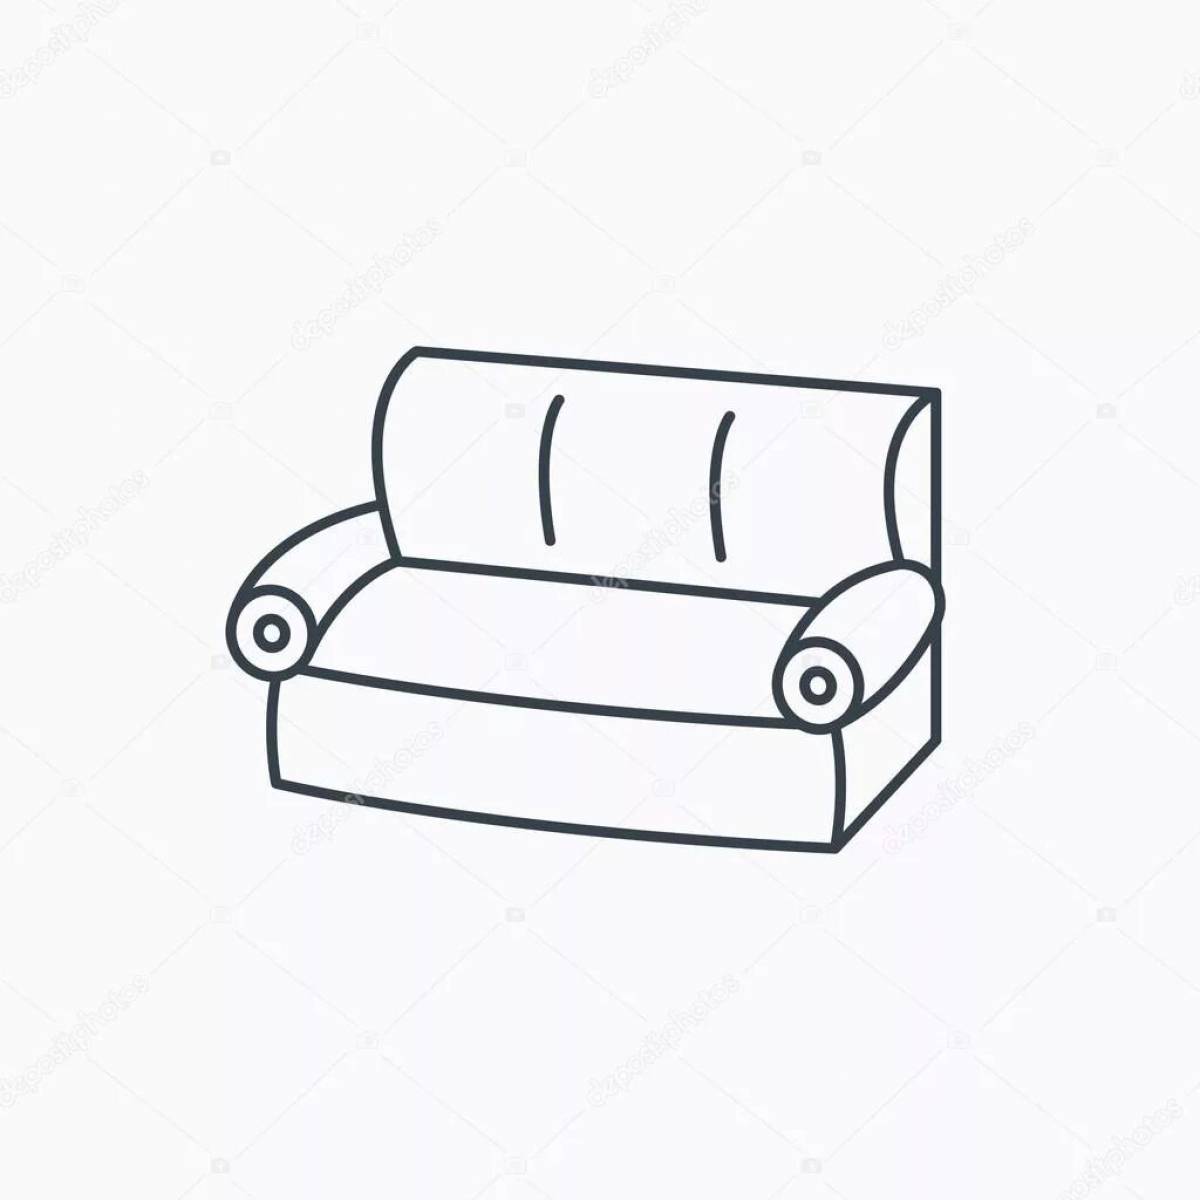 Рисунок дивана легко